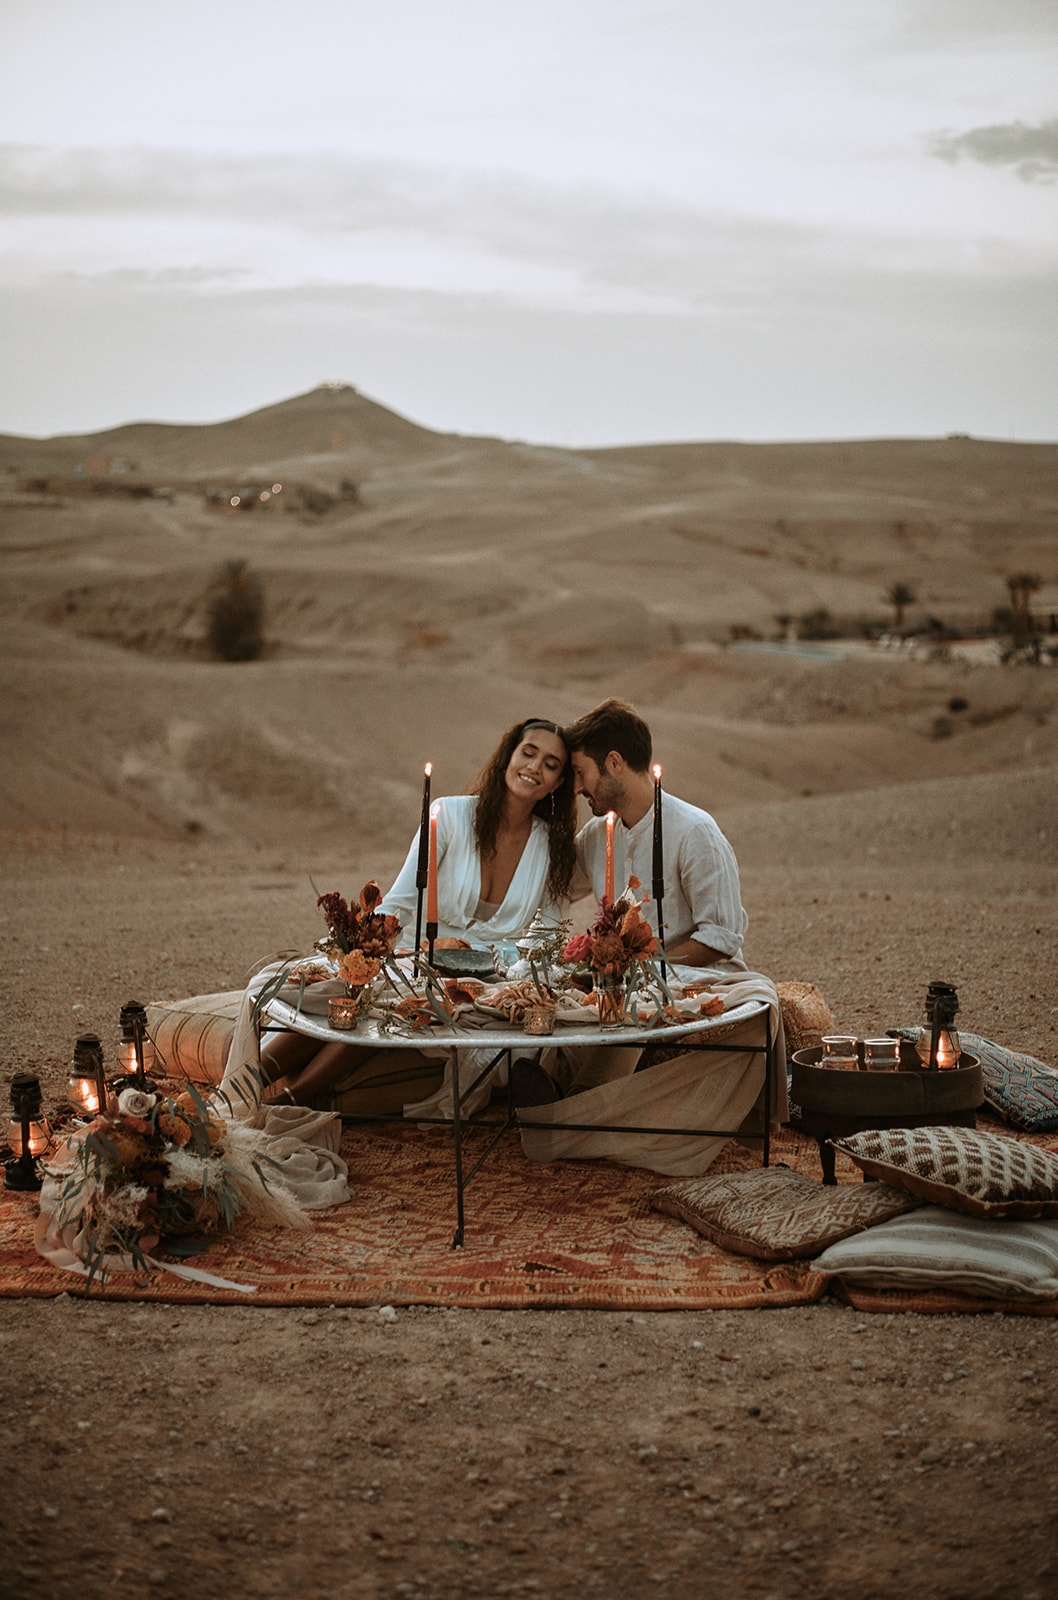 Wedding dinner in Agafay Desert, Marrakech, Morocco - Portfolio